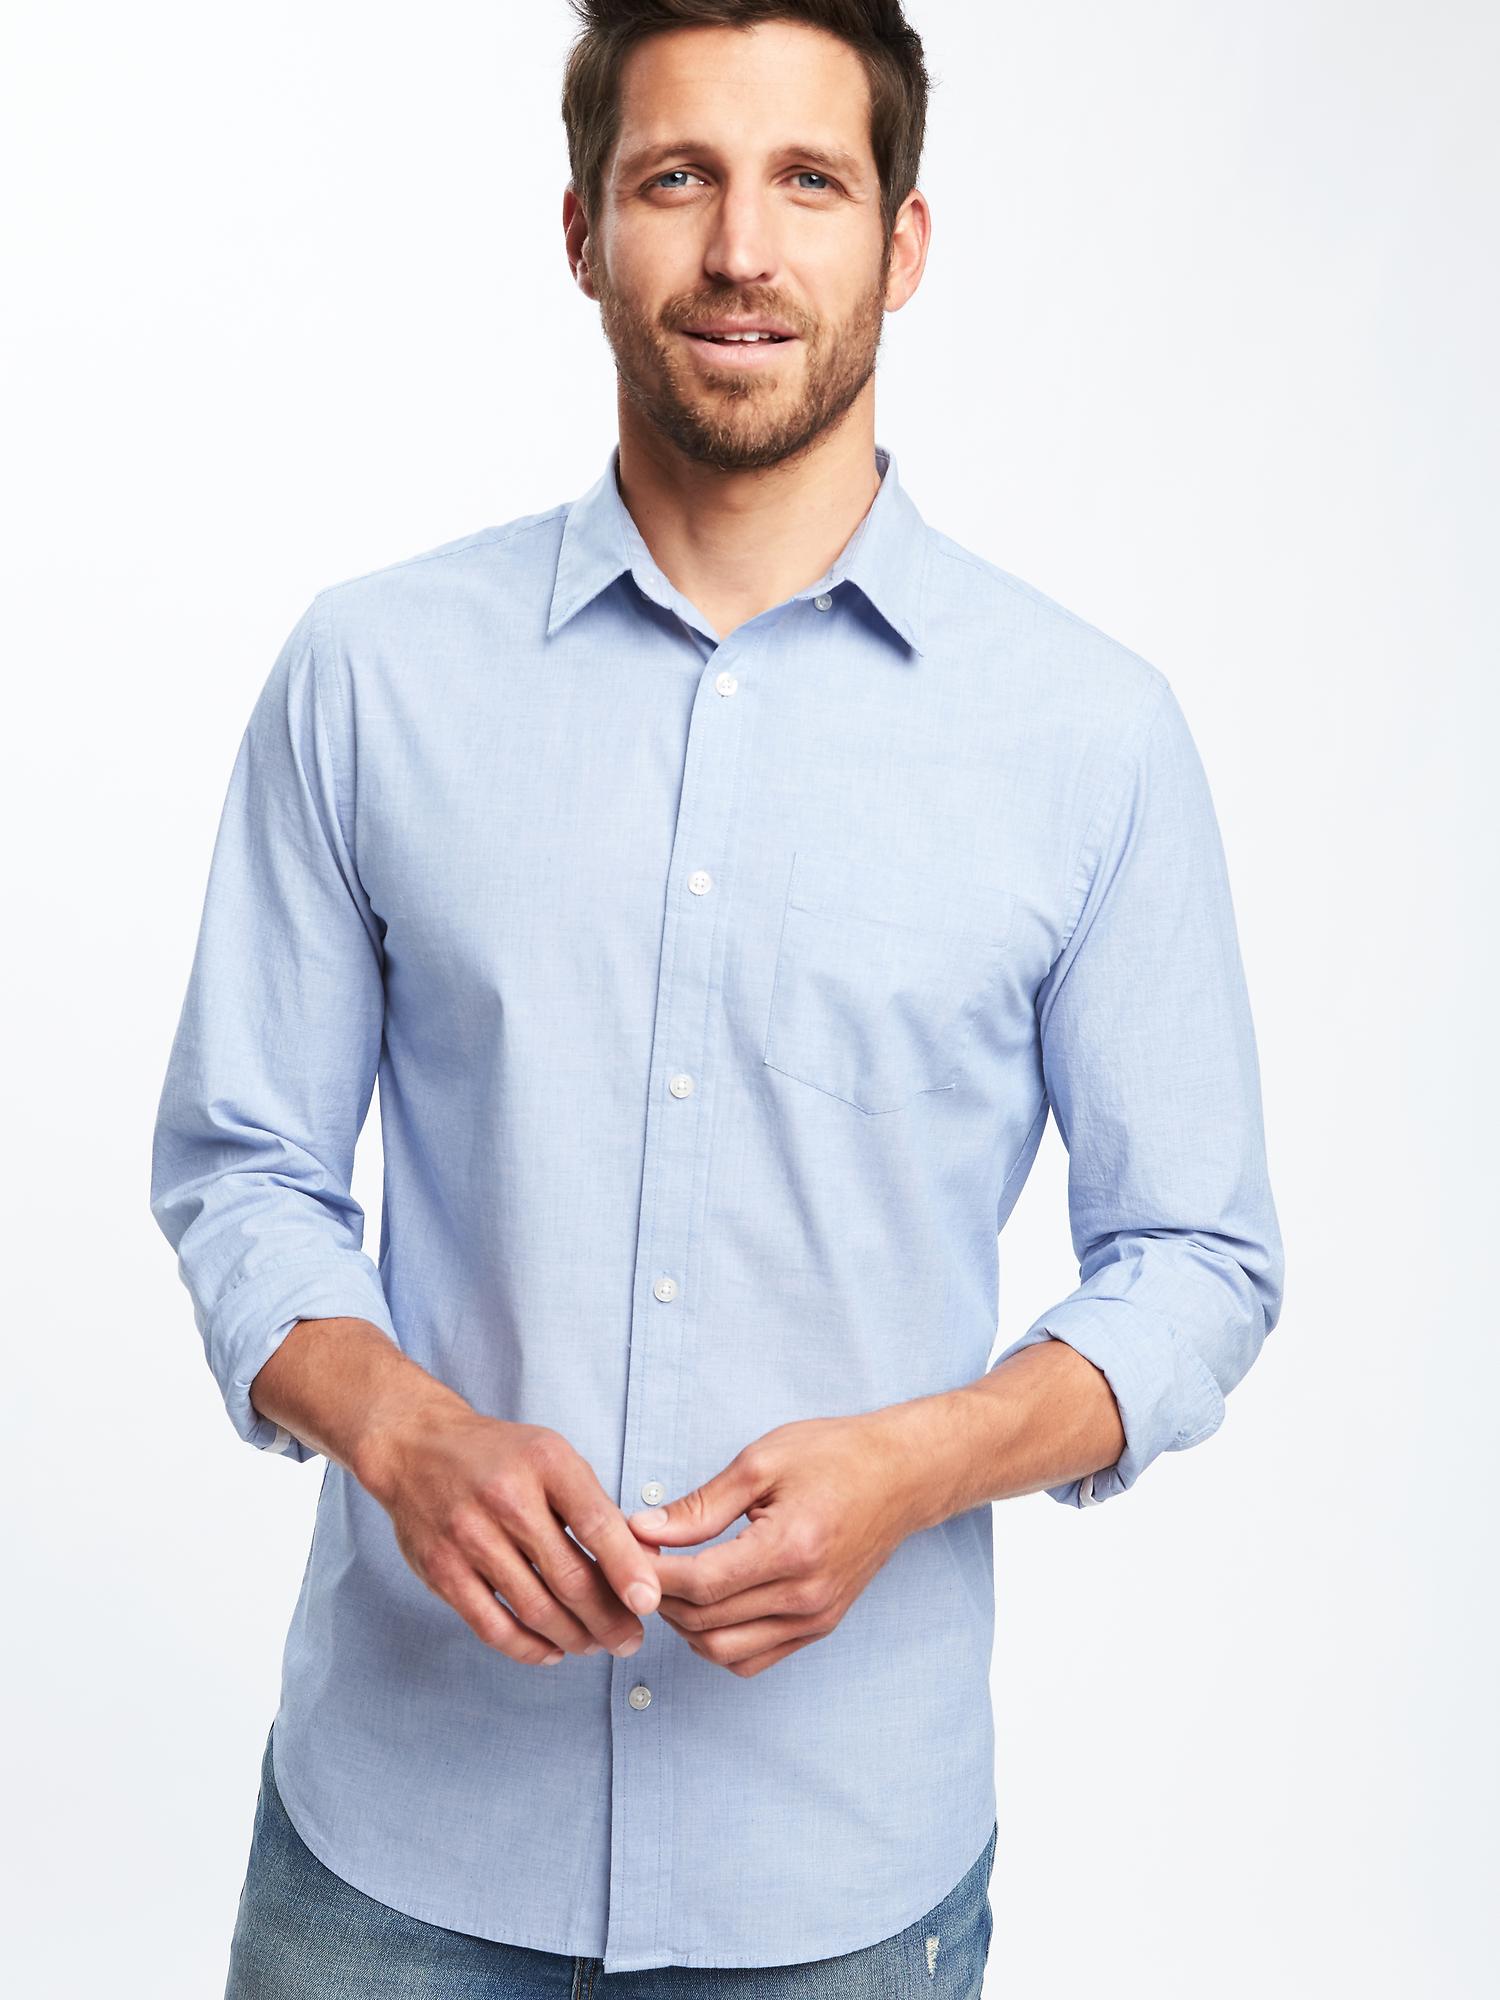 Slim-Fit Built-In Flex Everyday Shirt for Men | Old Navy